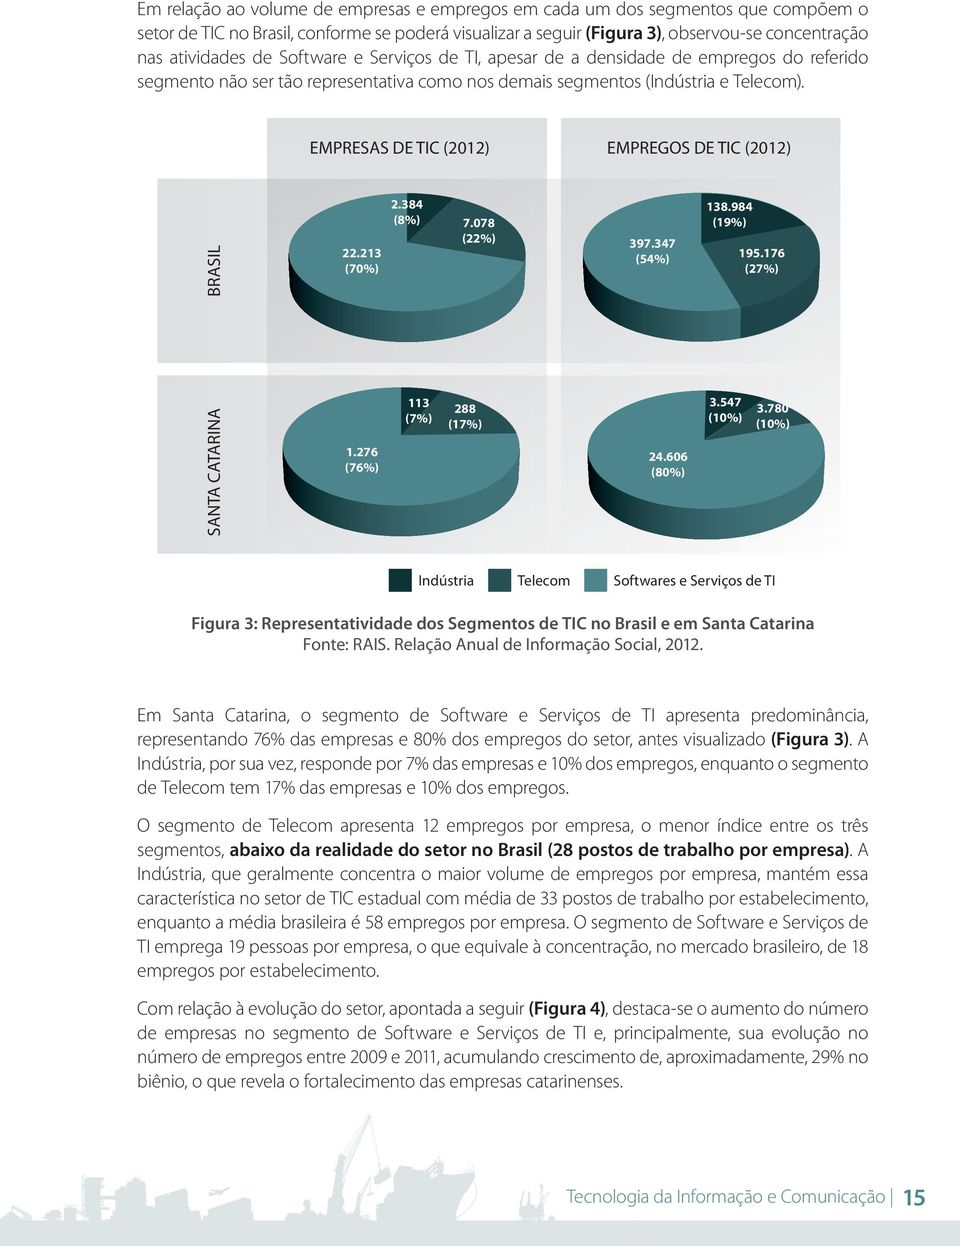 EMPRESAS DE TIC (2012) EMPREGOS DE TIC (2012) BRASIL 22.213 (70%) 2.384 (8%) 7.078 (22%) 397.347 (54%) 138.984 (19%) 195.176 (27%) SANTA CATARINA 1.276 (76%) 113 (7%) 288 (17%) 24.606 (80%) 3.